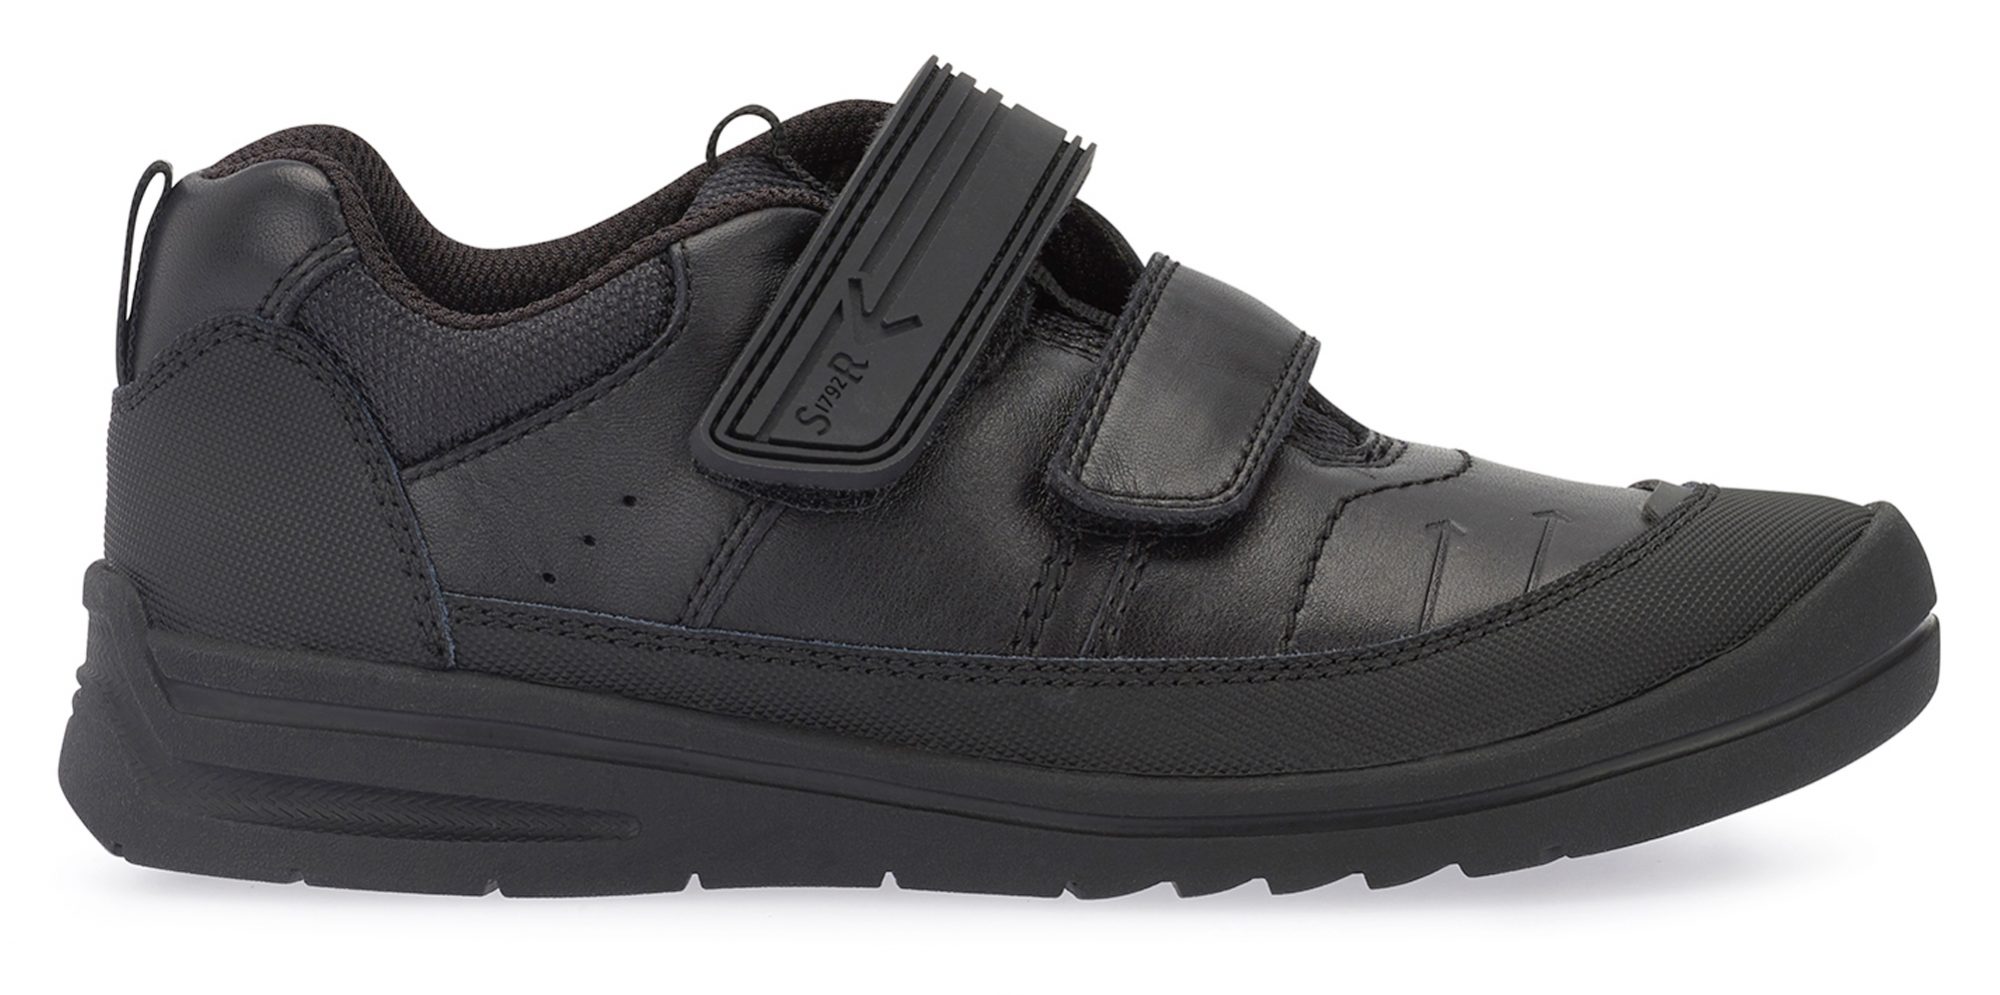 Start-Rite Bolt Black Leather 2783_7 - Boys School Shoes - Humphries Shoes